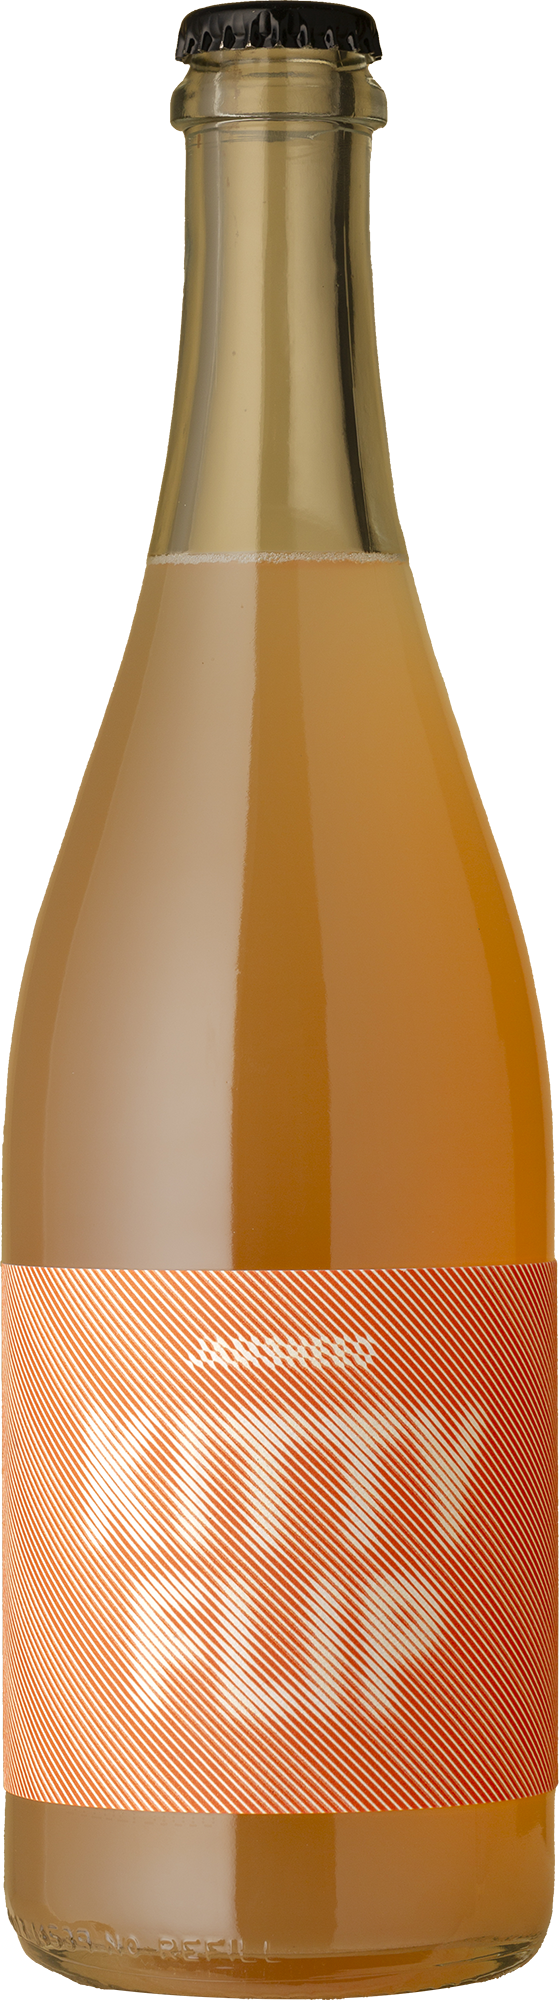 Jamsheed - Kitty Flip Pét Nat 2021 Sparkling Wine